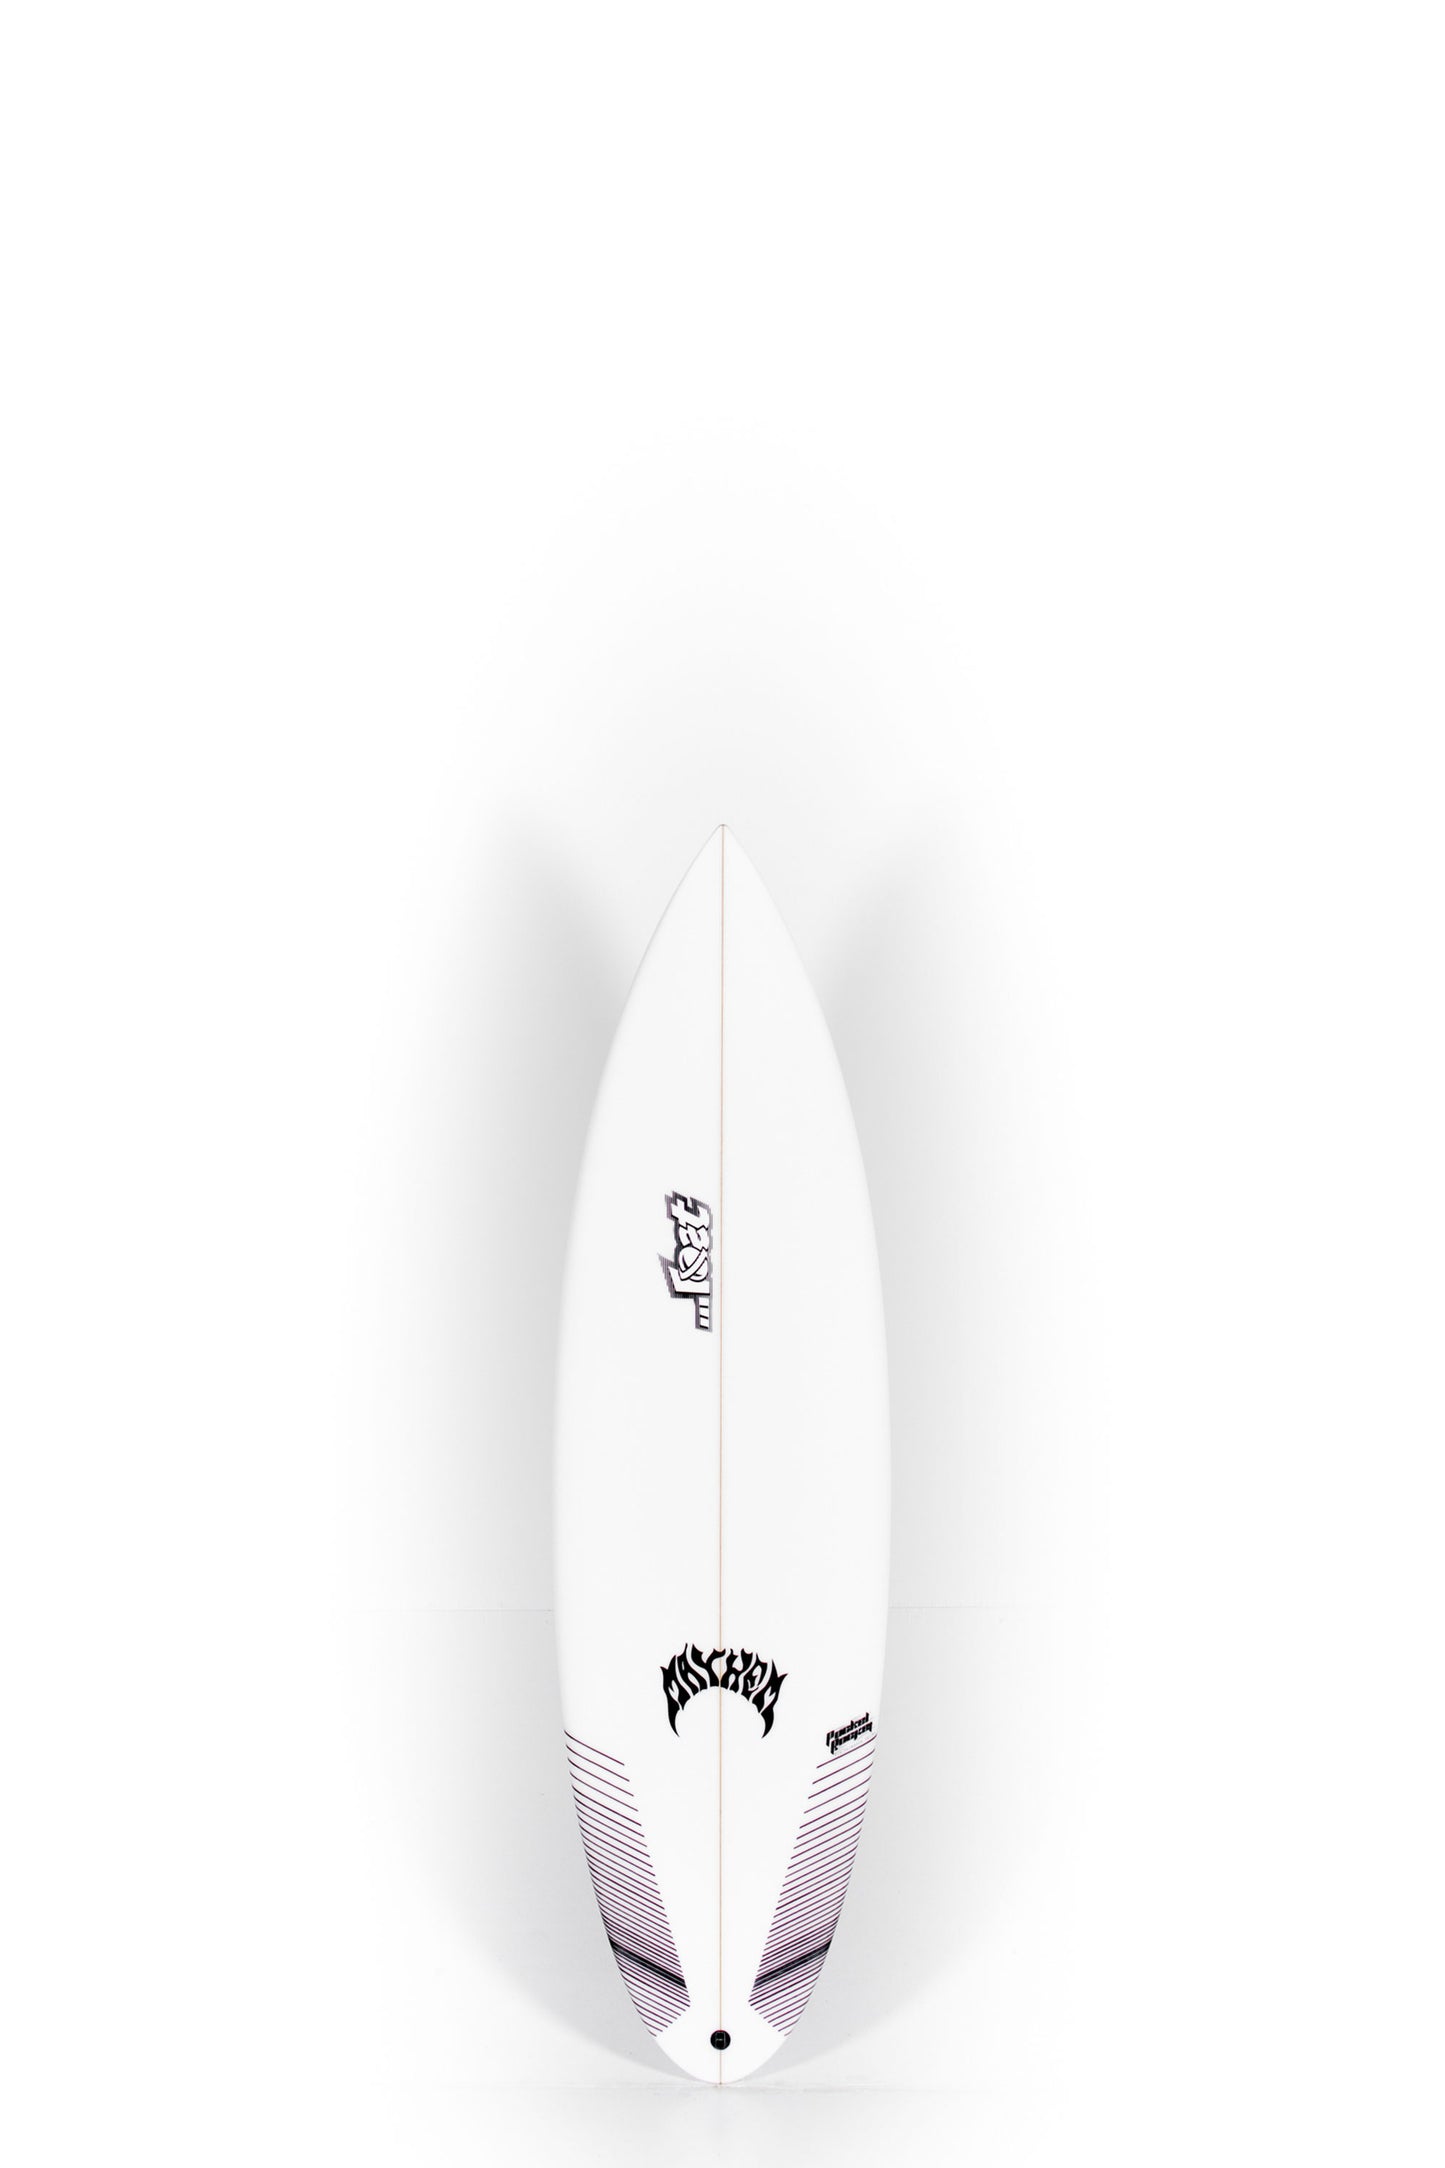 
                  
                    Pukas Surf shop - Lost Surfboard - POCKET ROCKET by Matt Biolos - 5’8” 1/2 x 18,18 x 2,15 x 22,7L - MH13618
                  
                